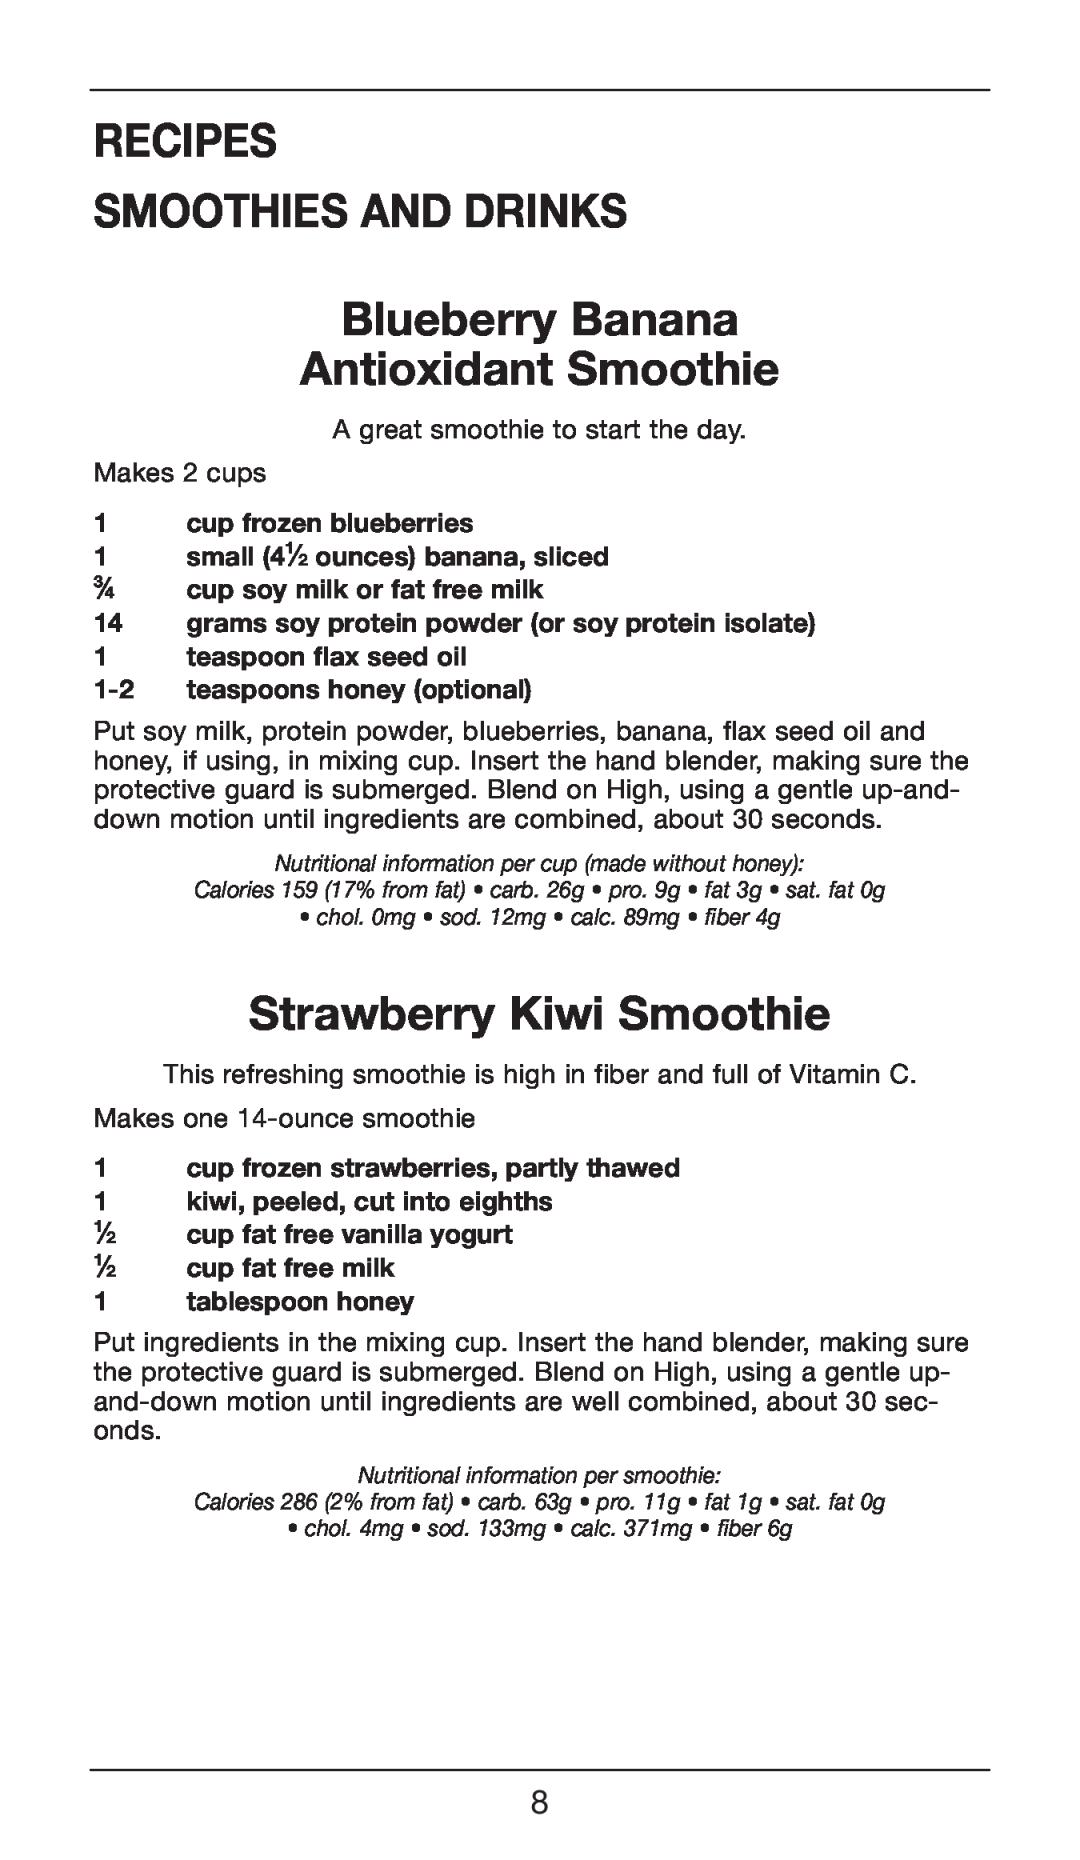 Cuisinart CSB-75 manual RECIPES SMOOTHIES AND DRINKS Blueberry Banana Antioxidant Smoothie, Strawberry Kiwi Smoothie 